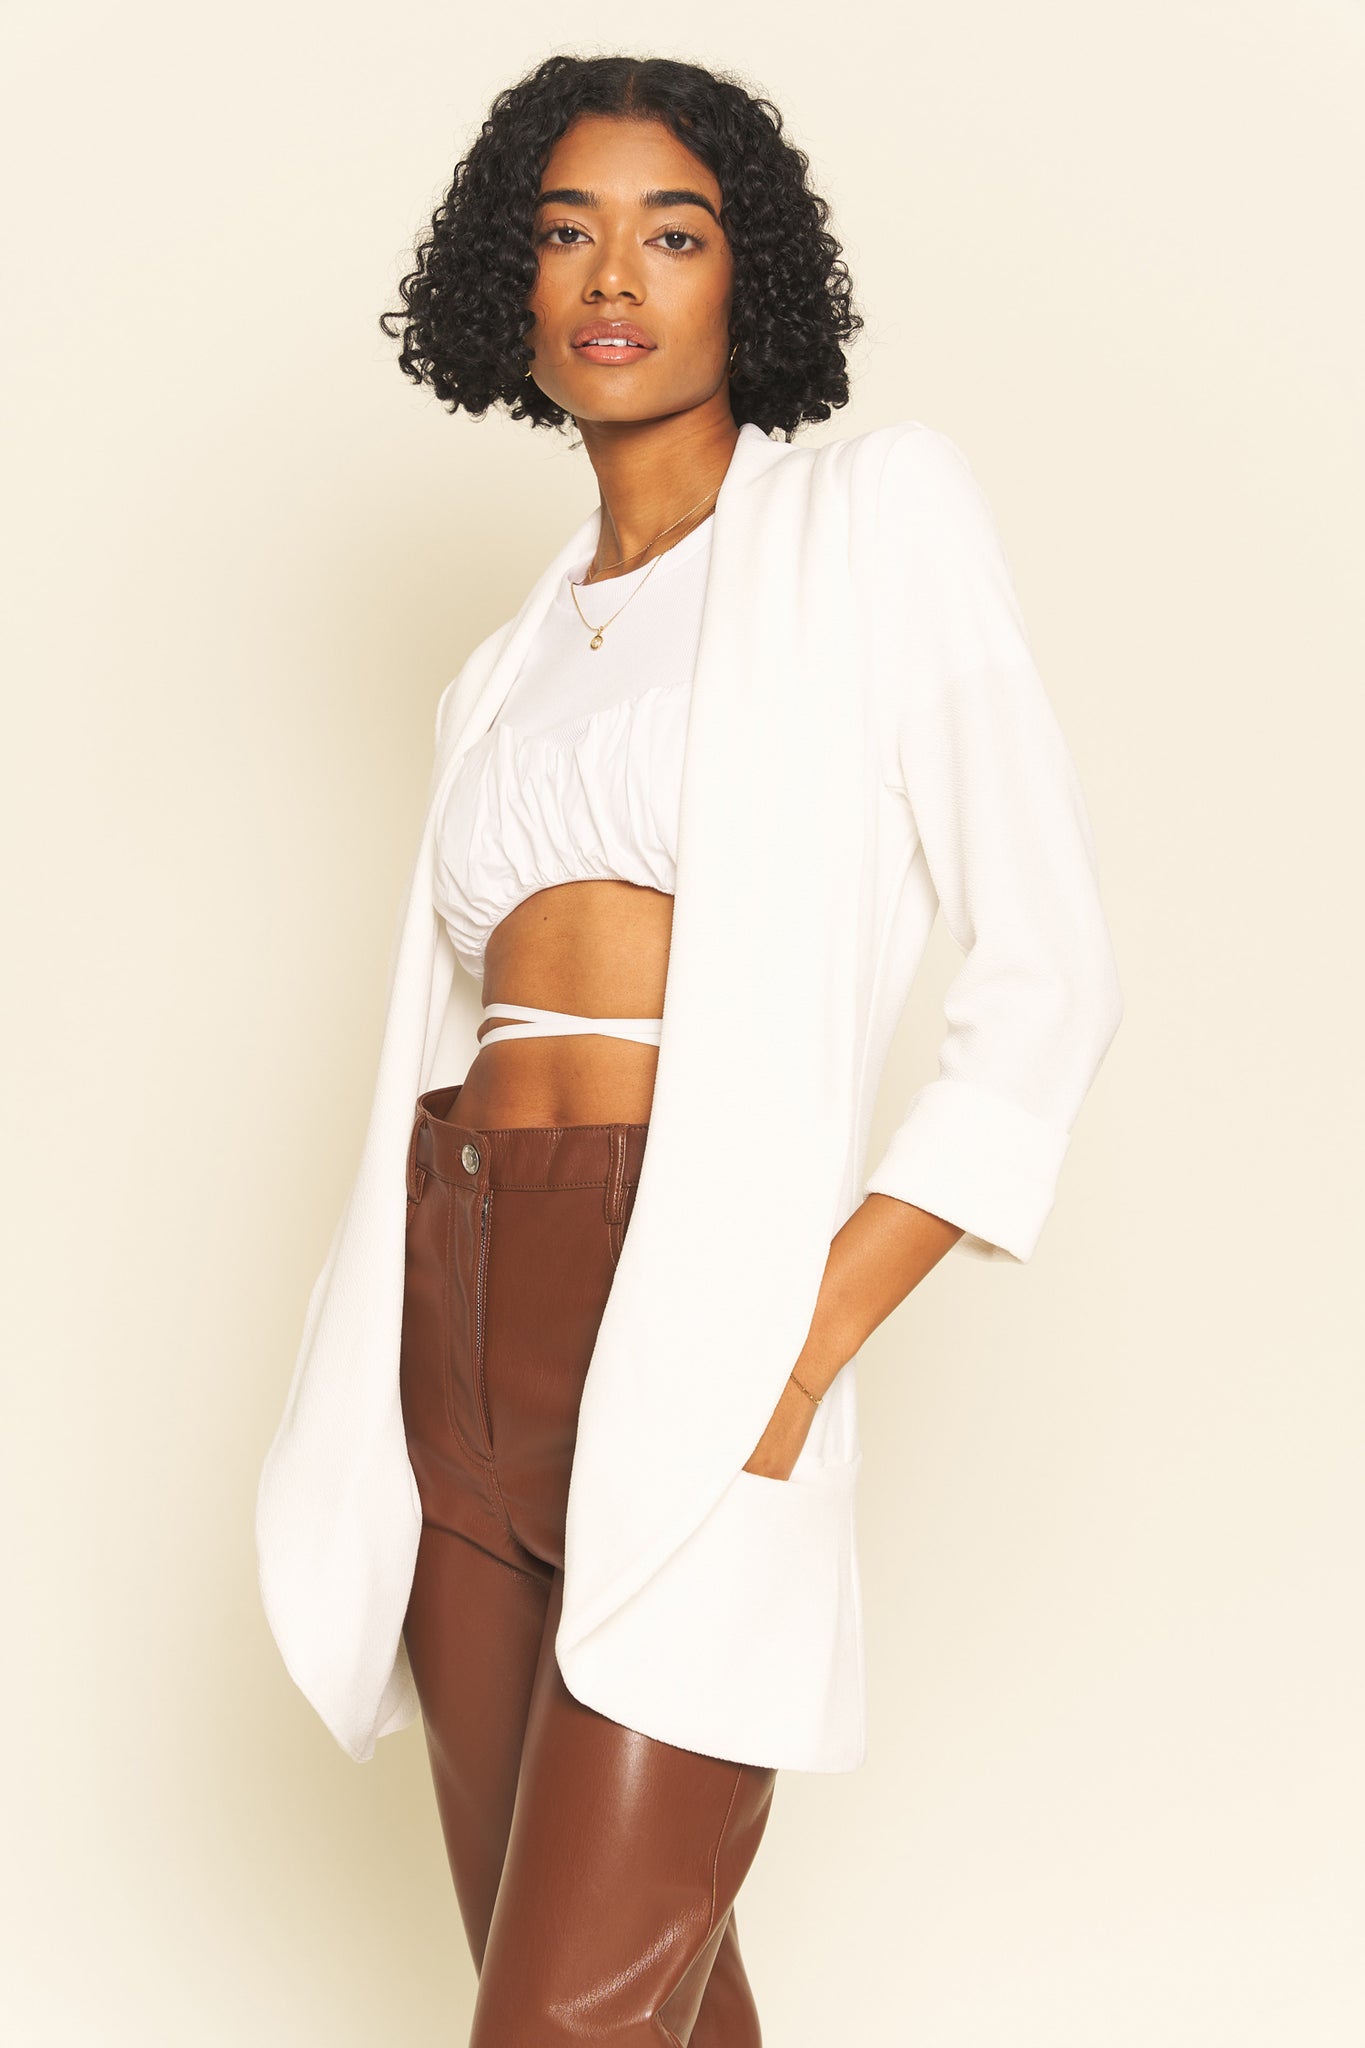 Lightweight Summer Fabric Classic Melanie Shawl Simple Staple White Neutral Color Workwear Blazer Jacket Everyday Shawl Front Pockets Office Wear Best Seller Customer Favorite